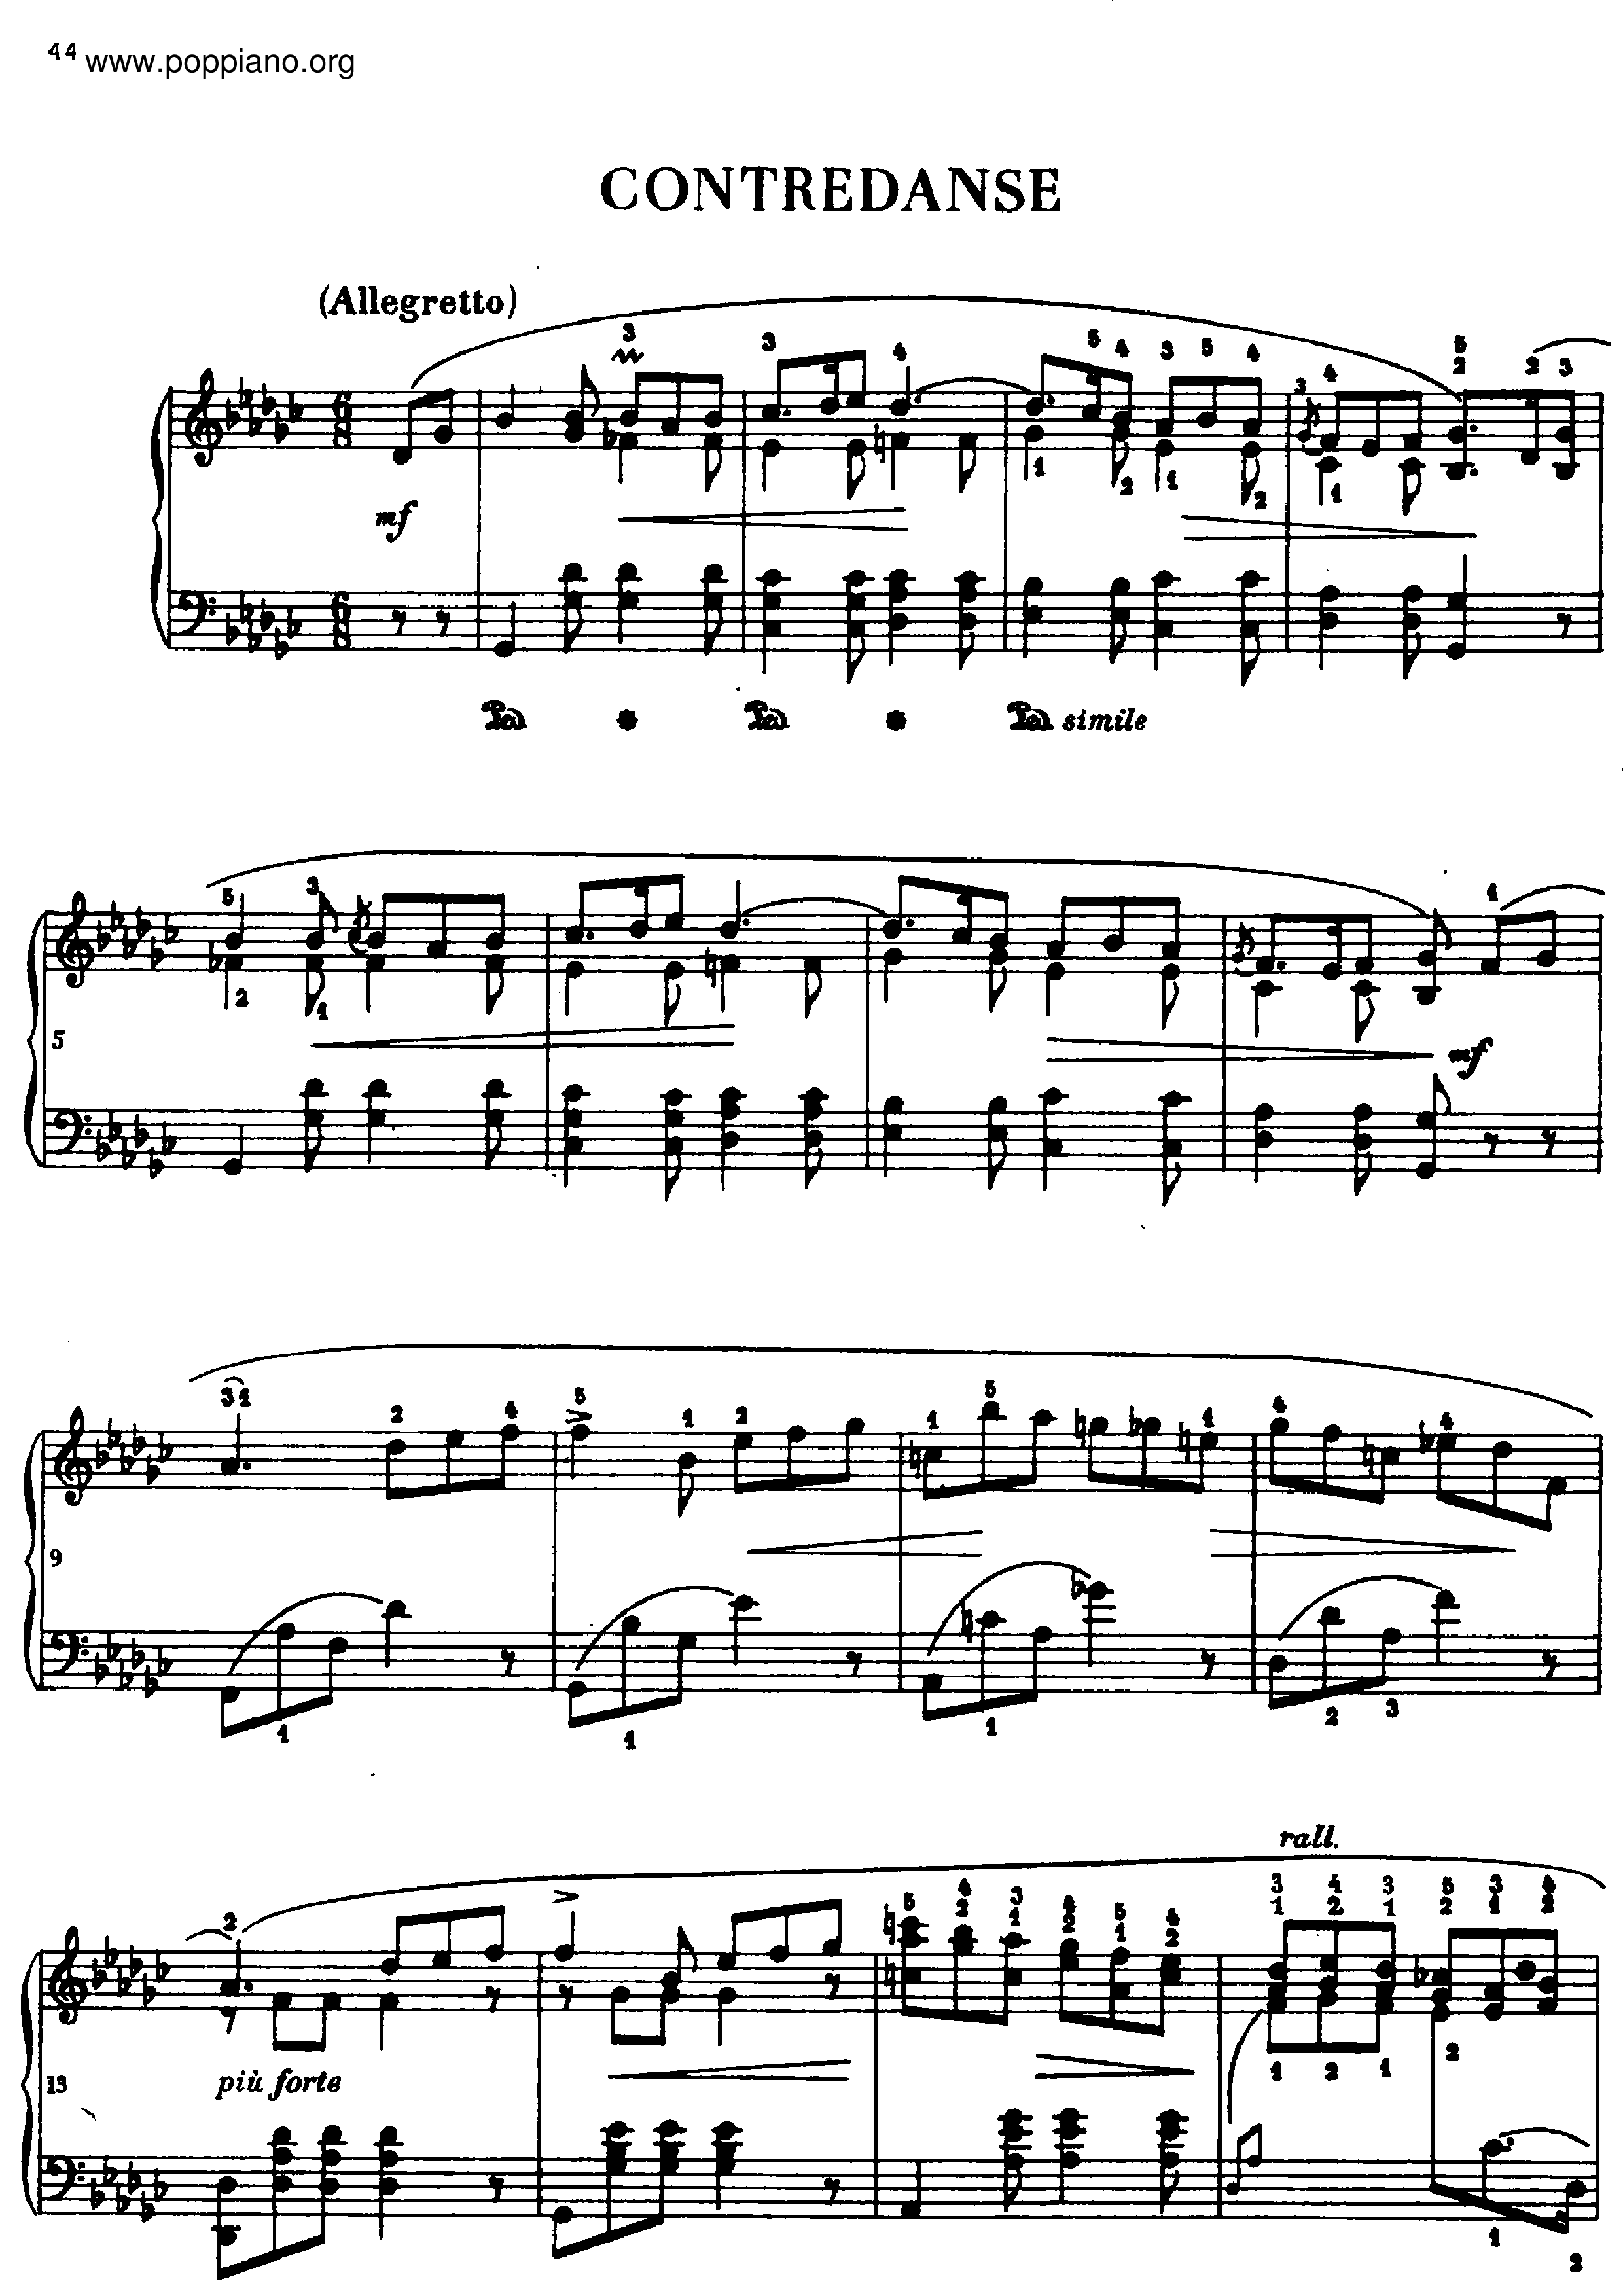 Contredanse in G sharp major琴譜